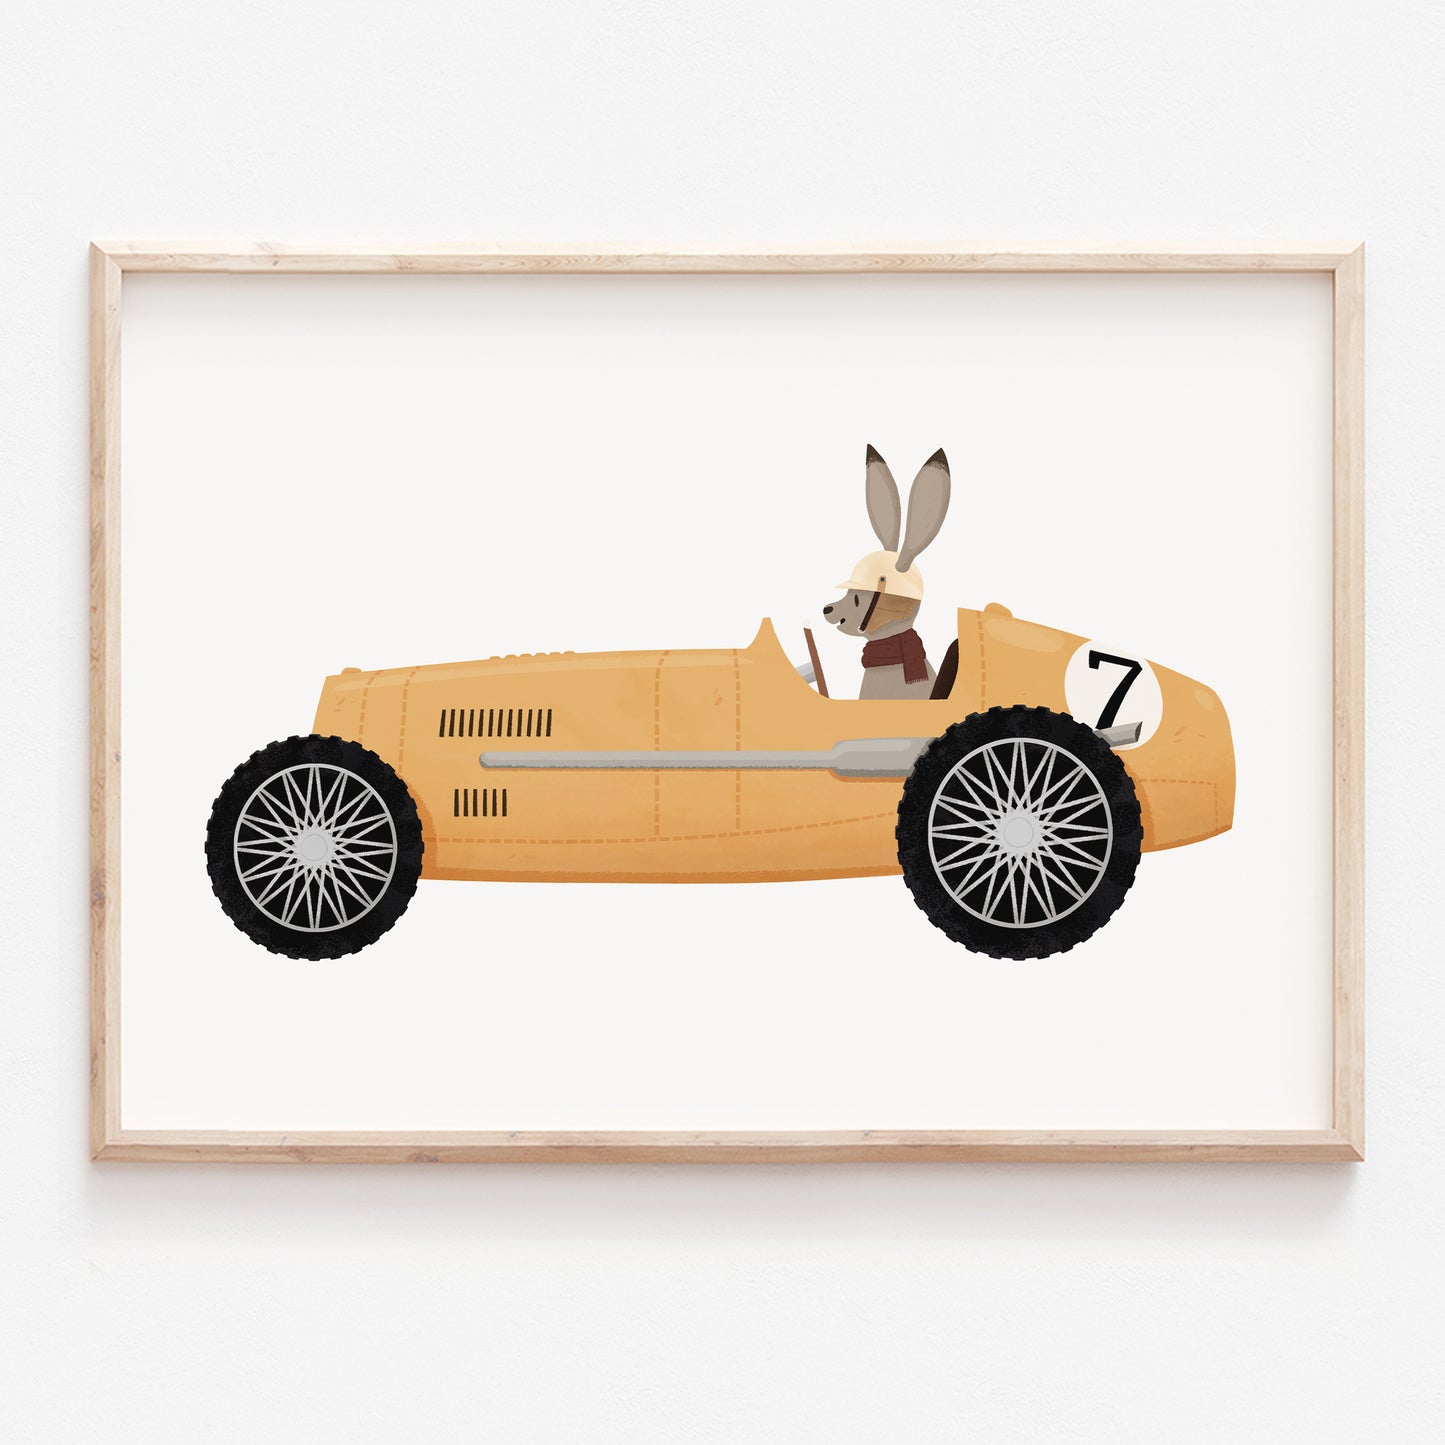 Rabbit driving a vintage racing car